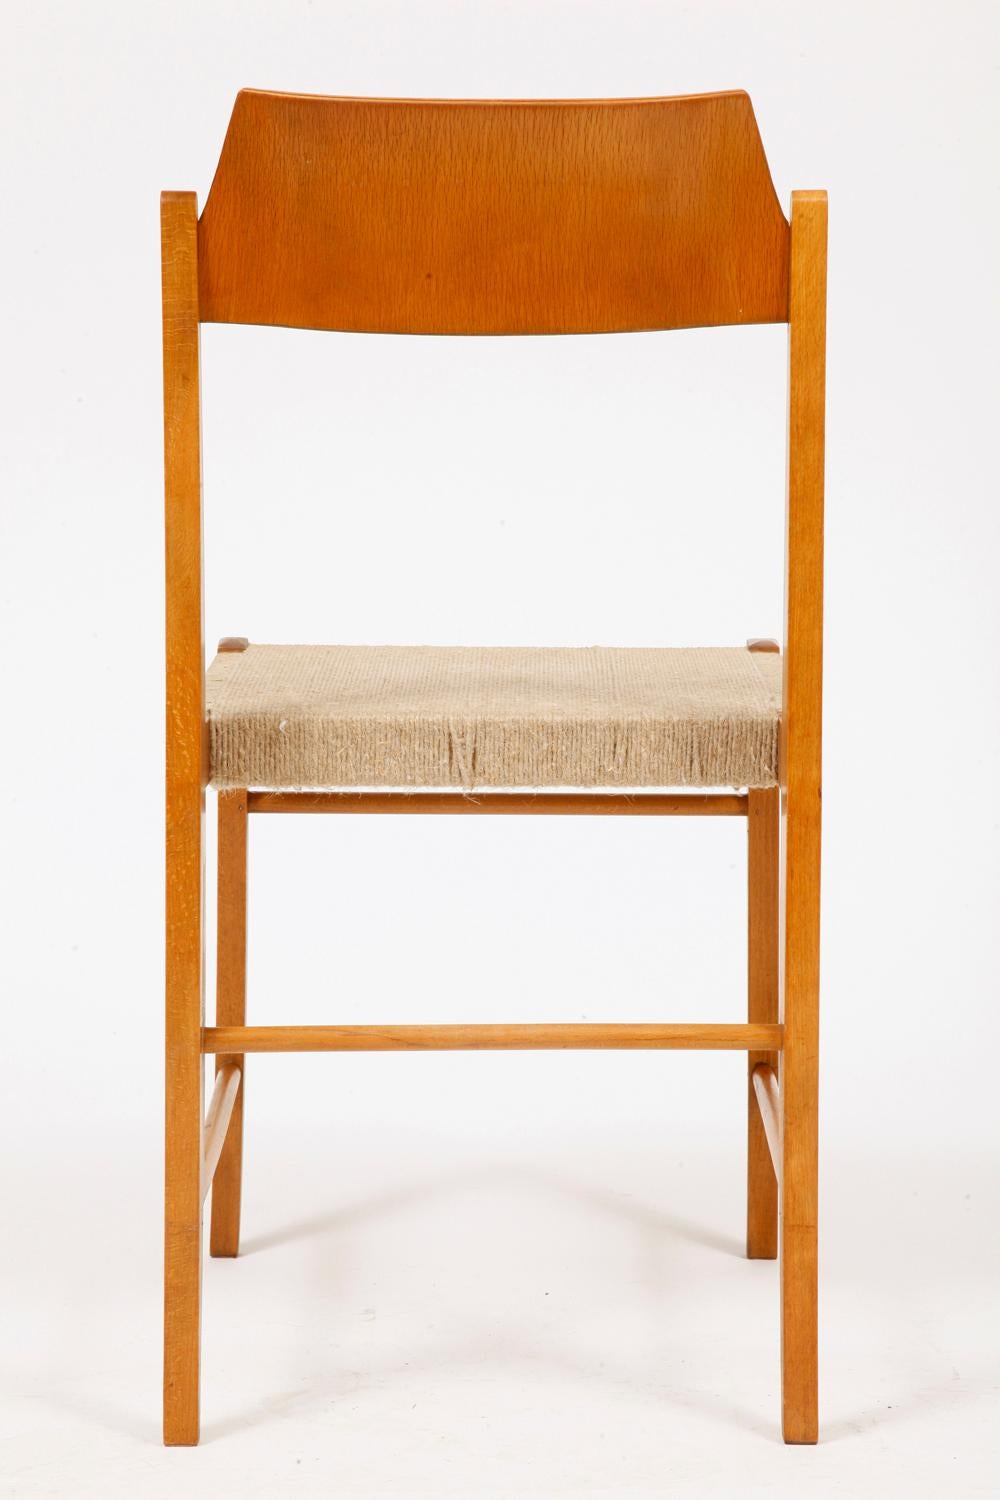 Polish Mid-Century Modern Chair by Irena Żmudzińska, Poland, 1960s For Sale